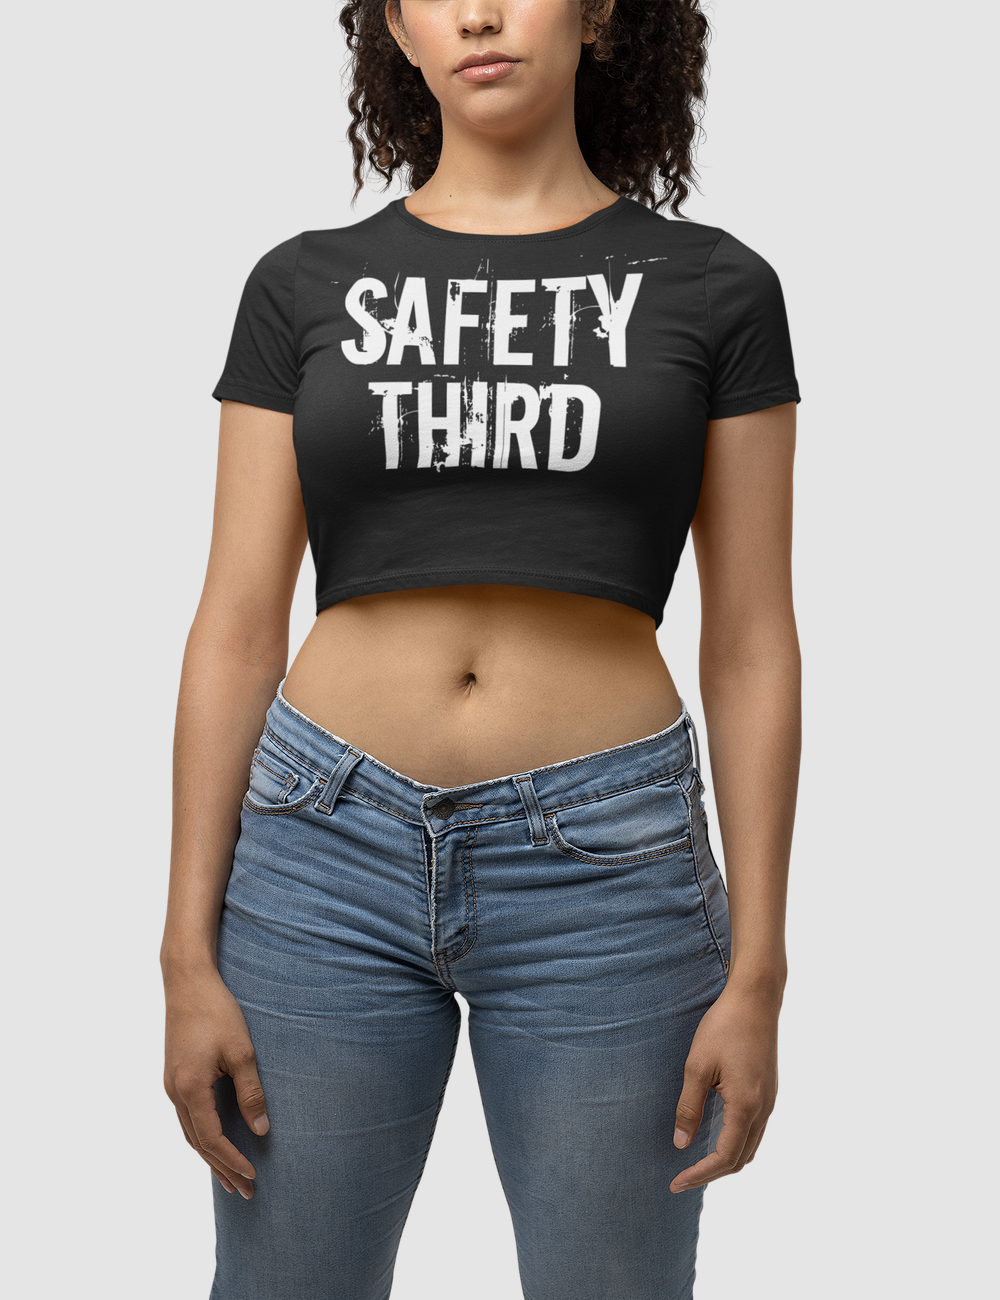 Safety Third Women's Fitted Crop Top T-Shirt OniTakai